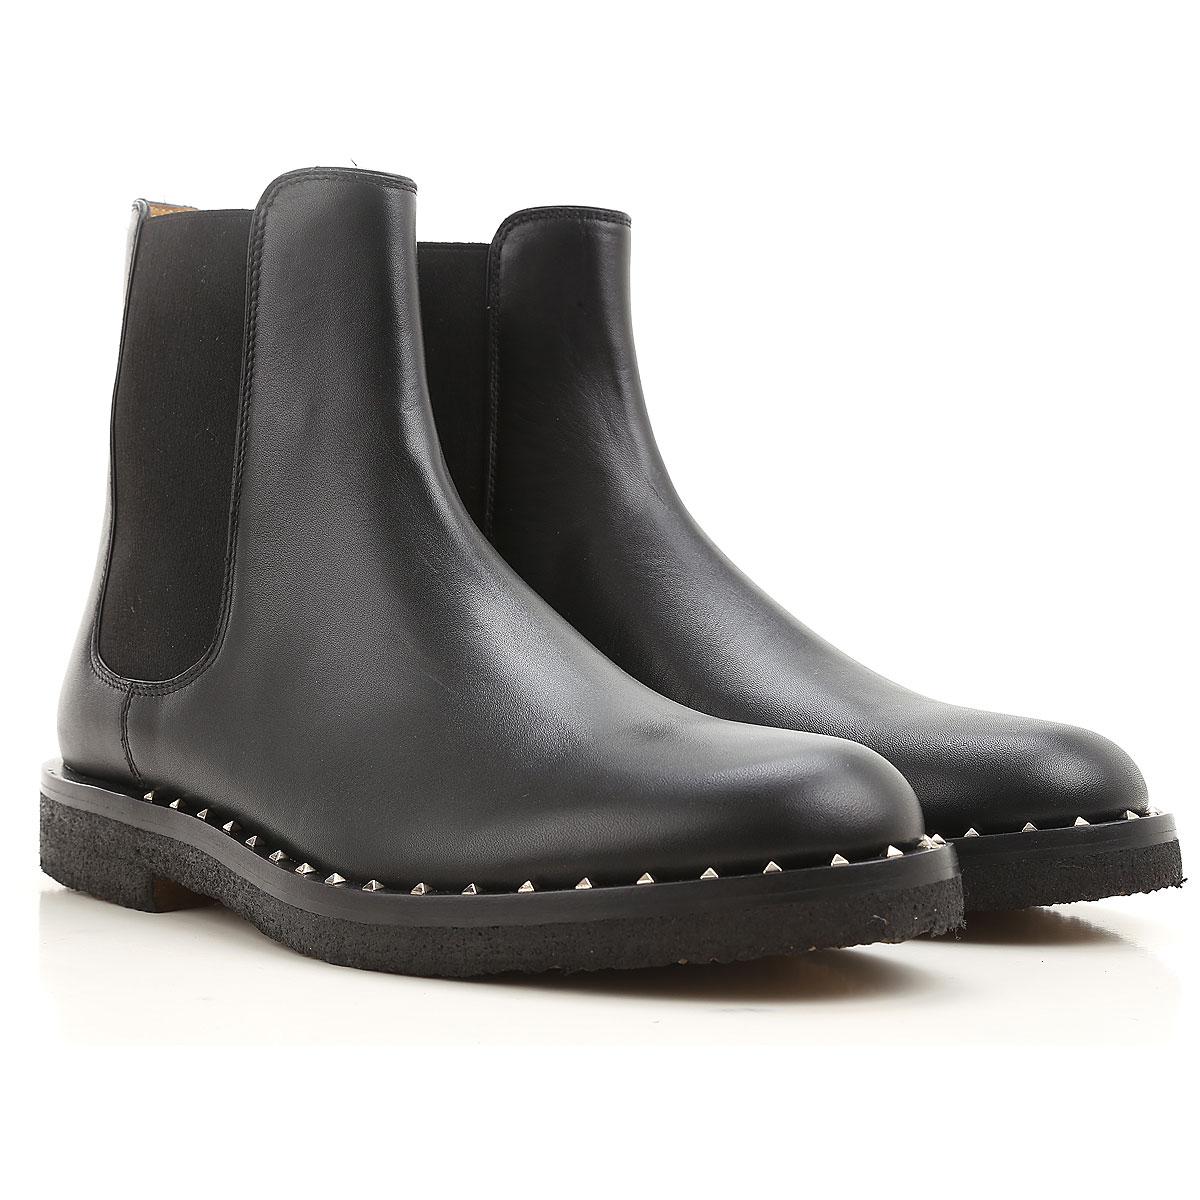 Lyst - Valentino Shoes For Men in Black for Men